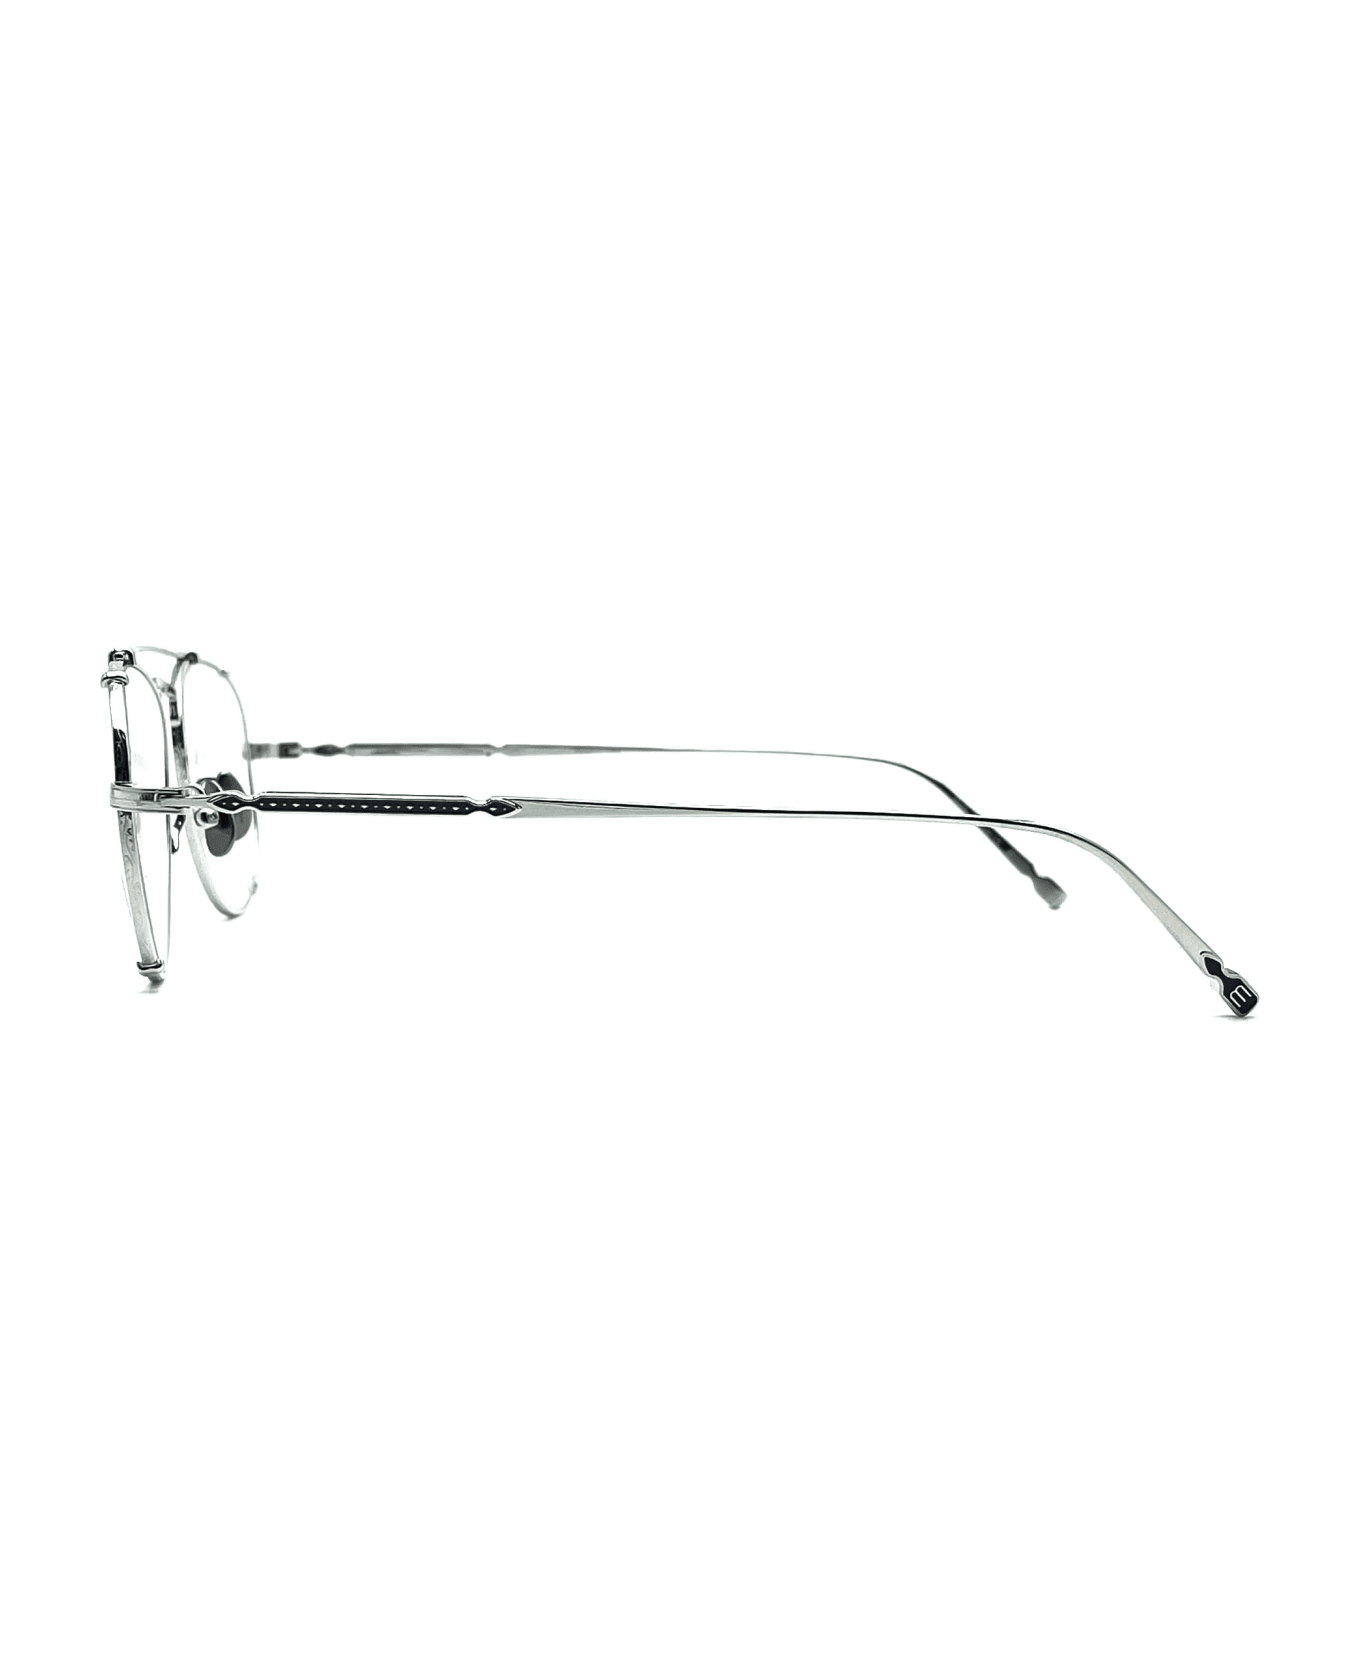 Matsuda M3142 - Palladium White Rx Glasses - Silver